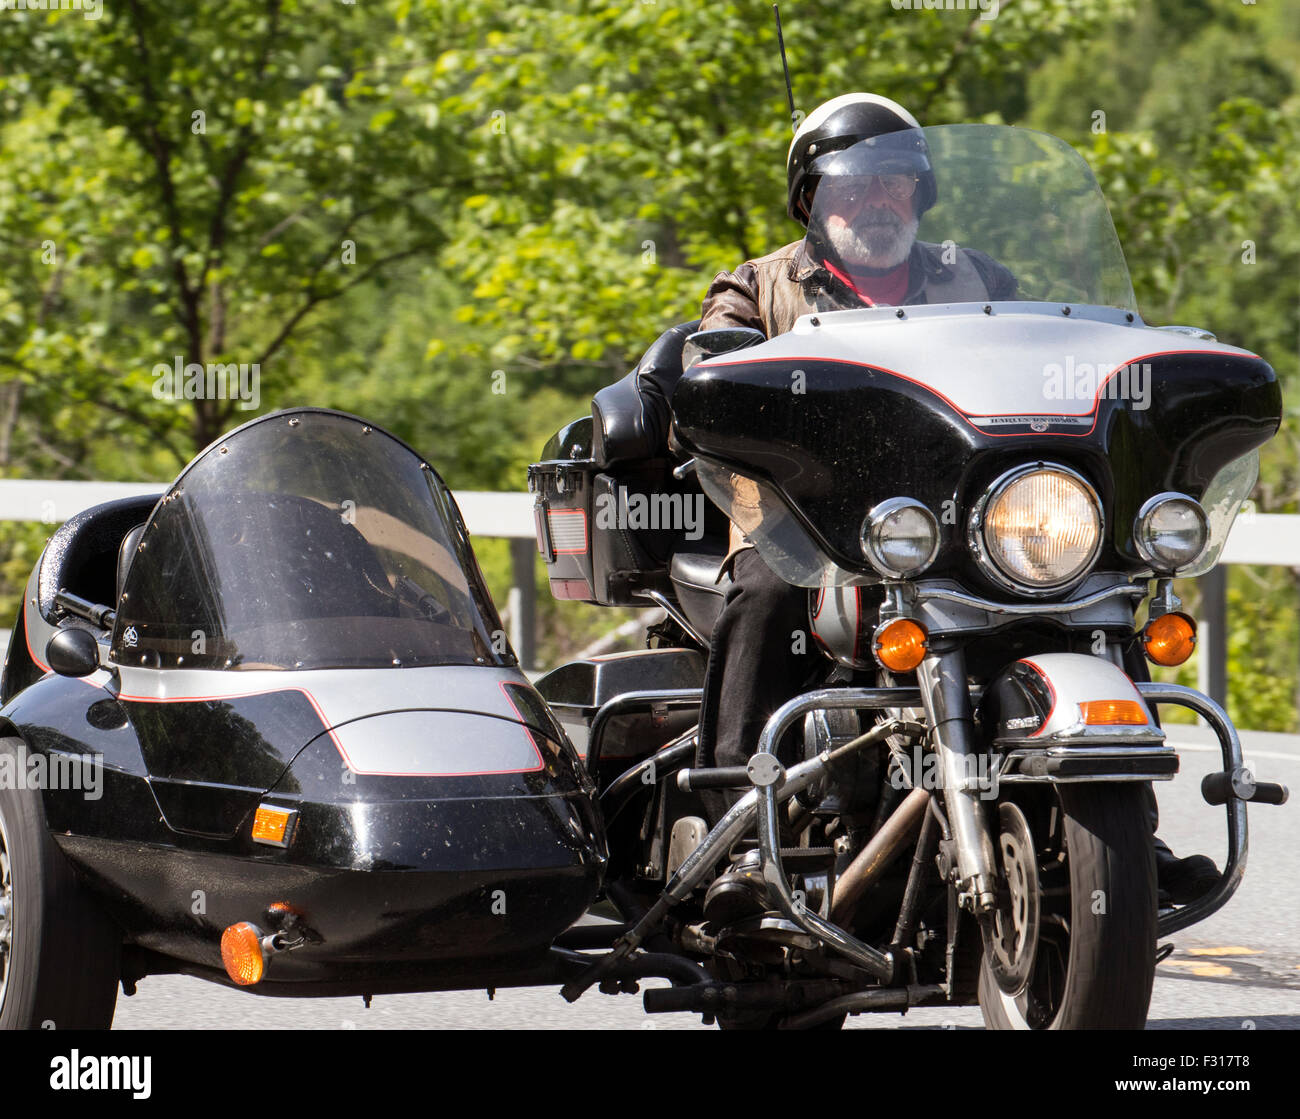 Uomo su una Harley Davidson moto motociclo con sidecar corrispondente lato auto. Foto Stock